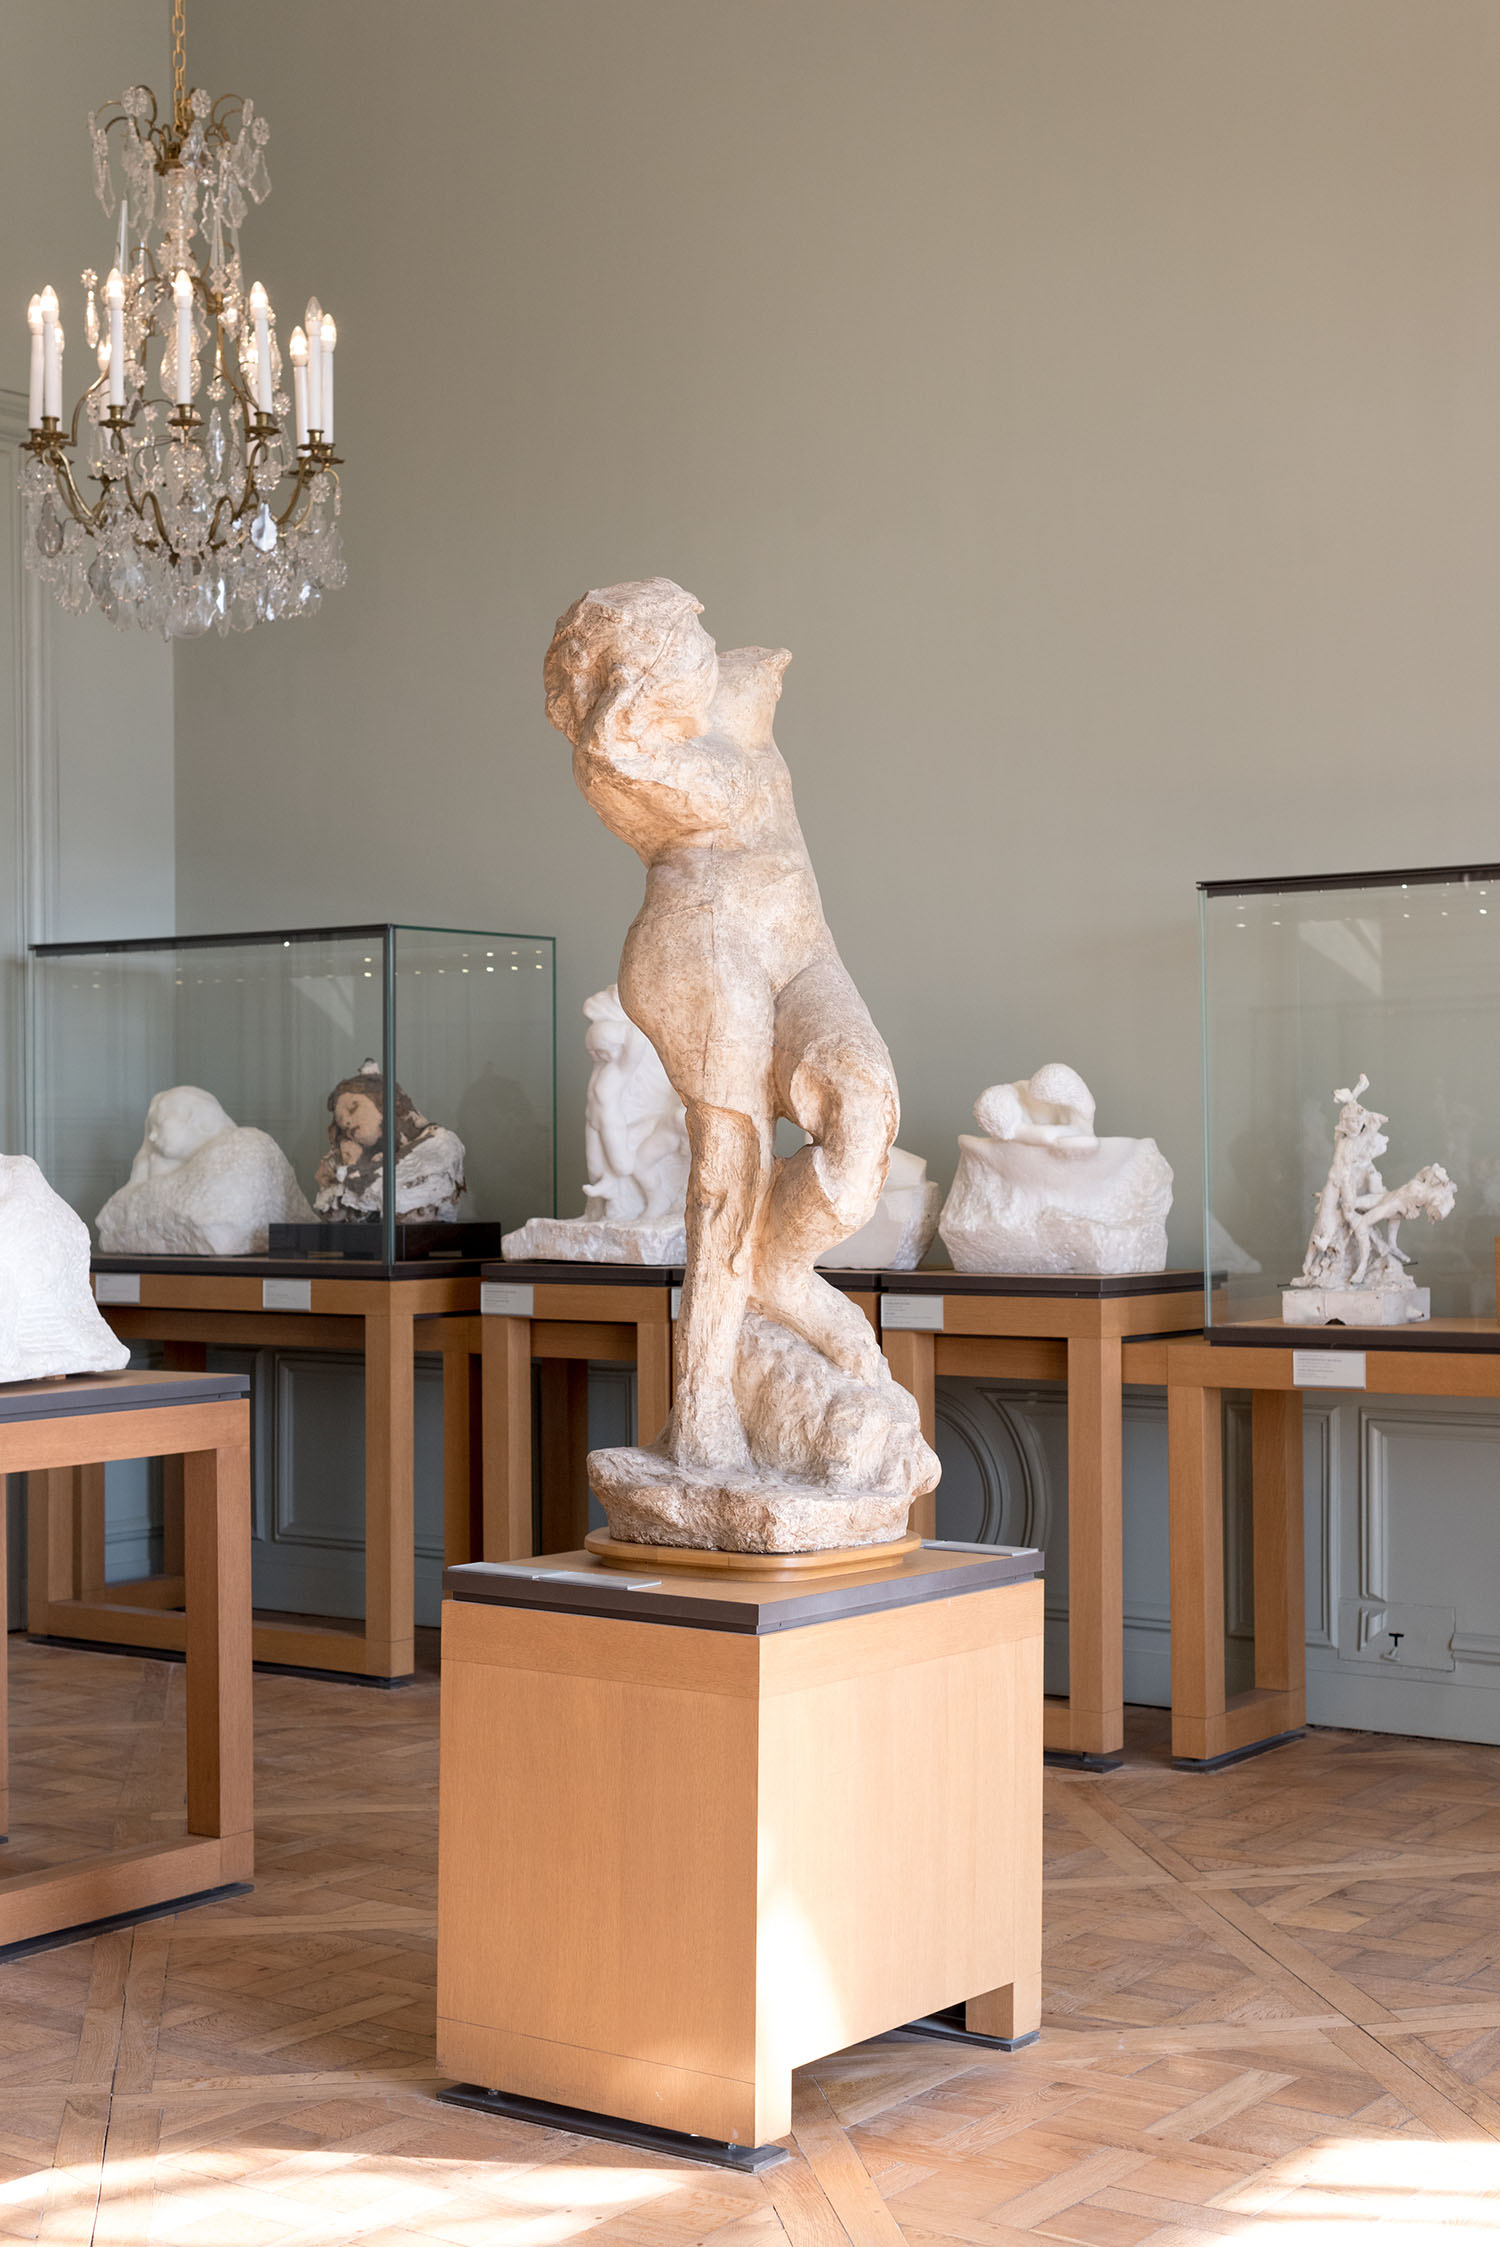 Coco & Vera - Statues at the Rodin Museum in Paris